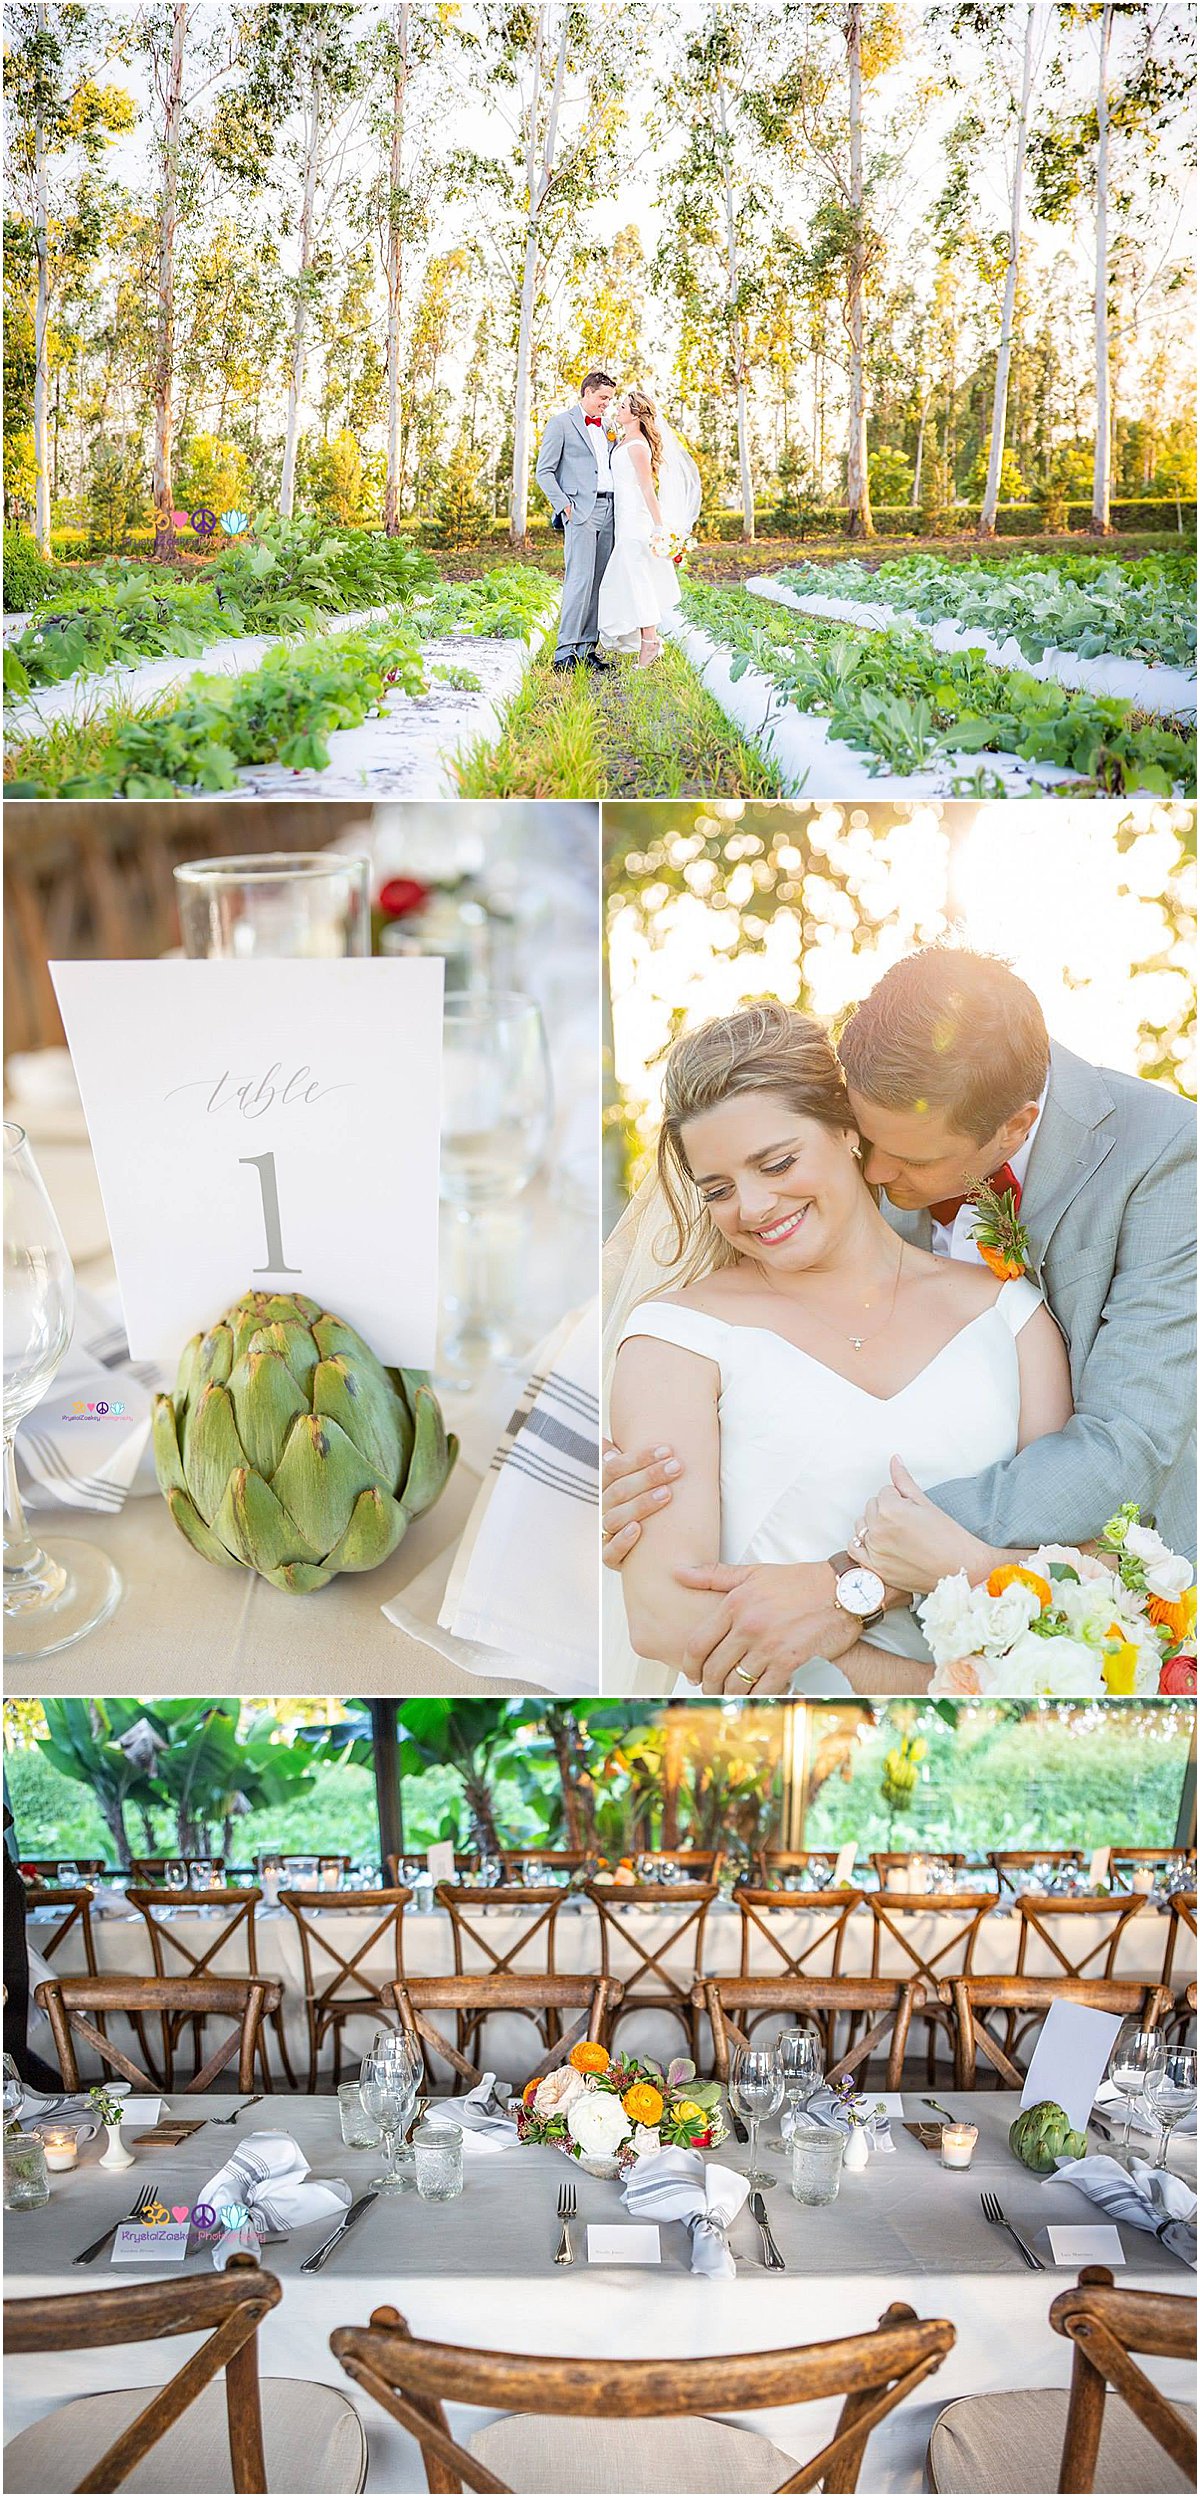 Kai Kai Farms | Top Palm Beach Wedding Venue | Married in Palm Beach | www.marriedinpalmbeach.com | Krystal Zaskey Photography